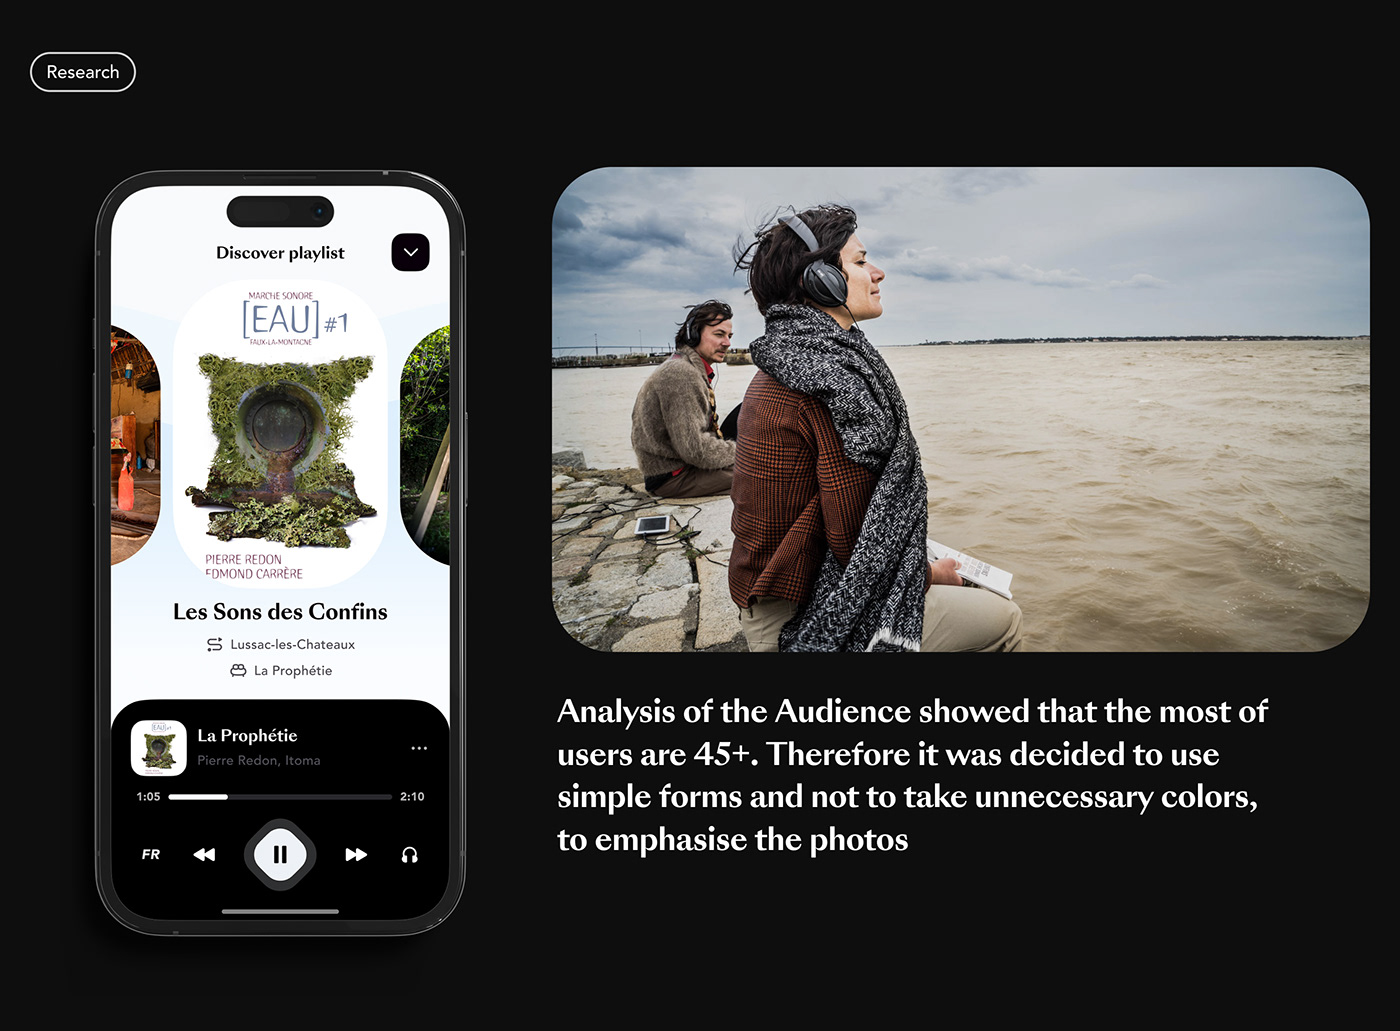 app design application audioguide Digital product design Mobile app music player app travel guide user experience user interface user interface design